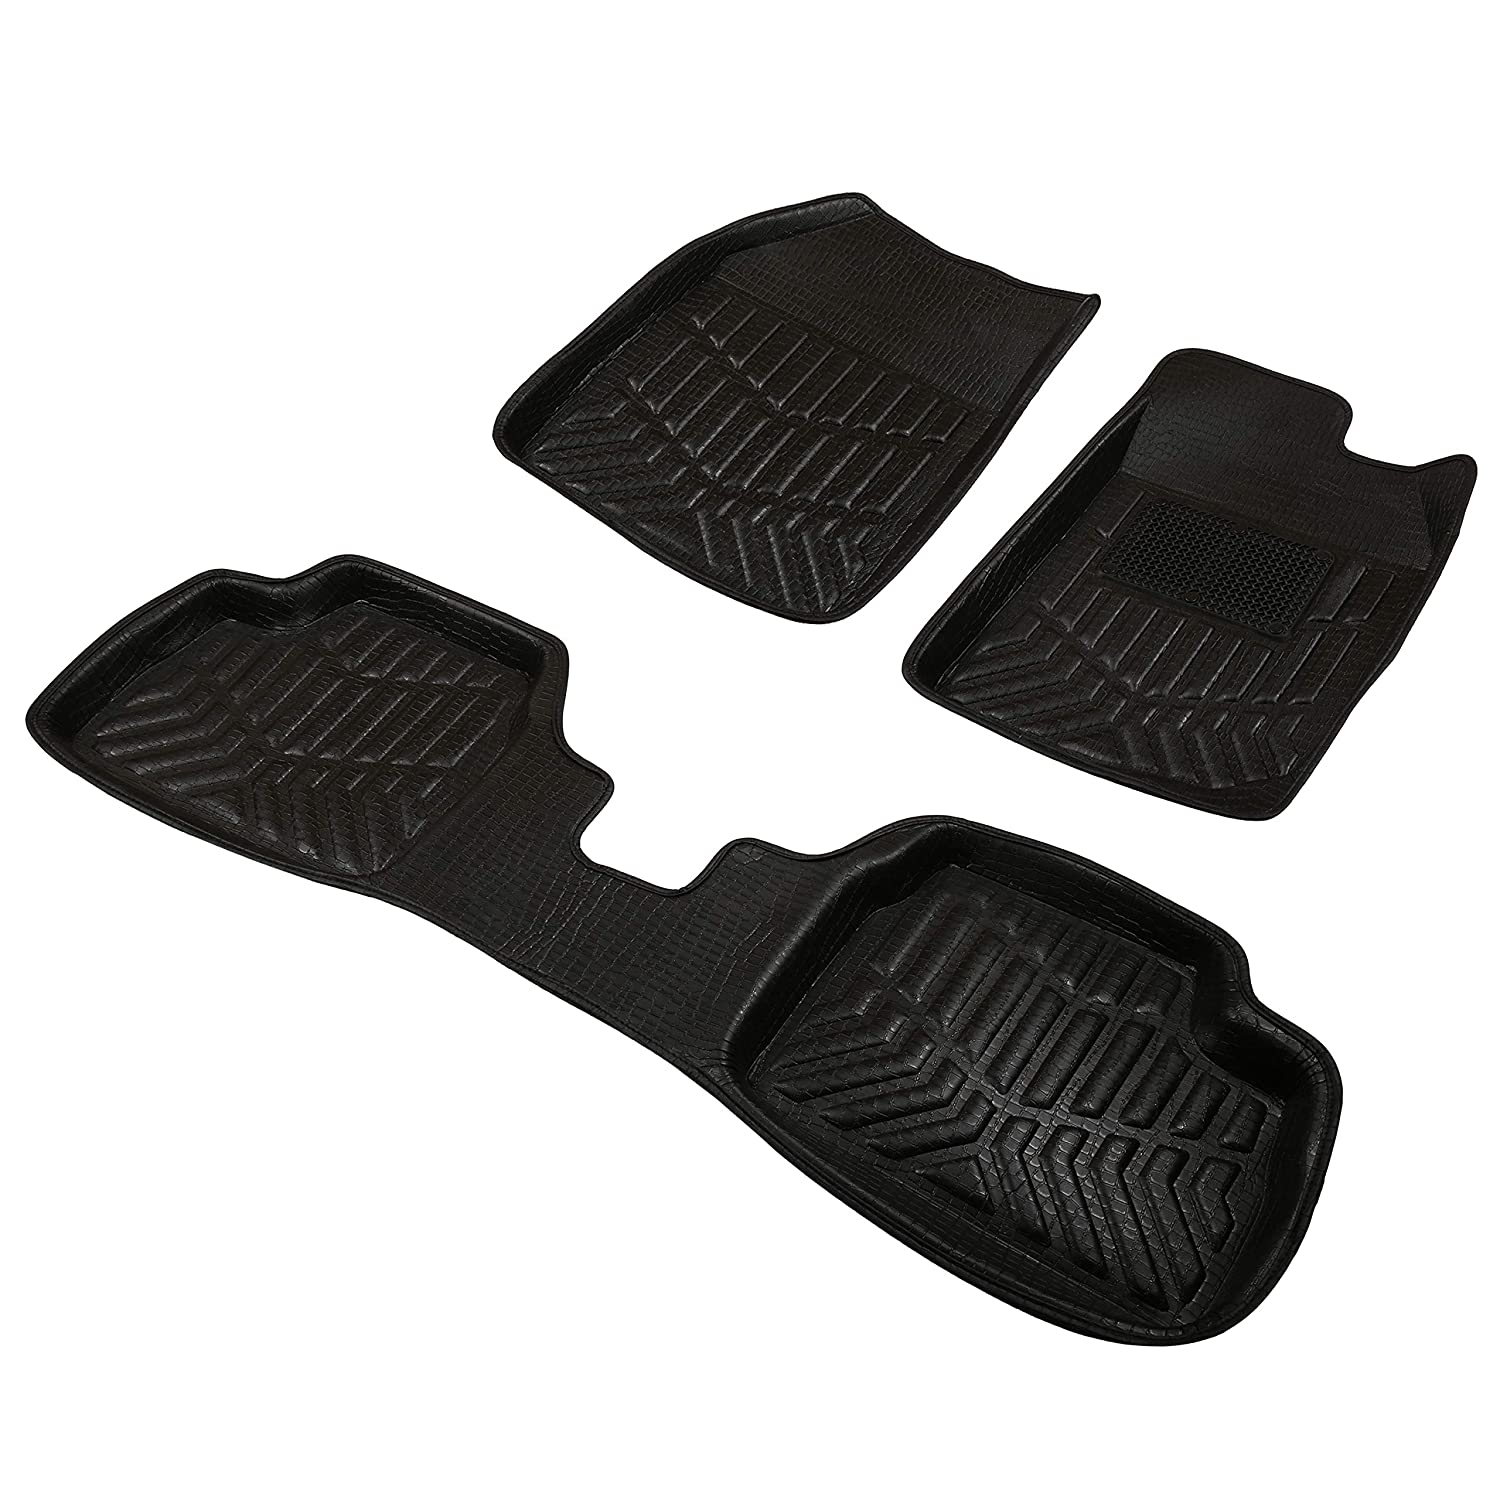 Drivn 3D Customised Car Floor Mat for Hyundai Grand i10 - Black (Set of 3)